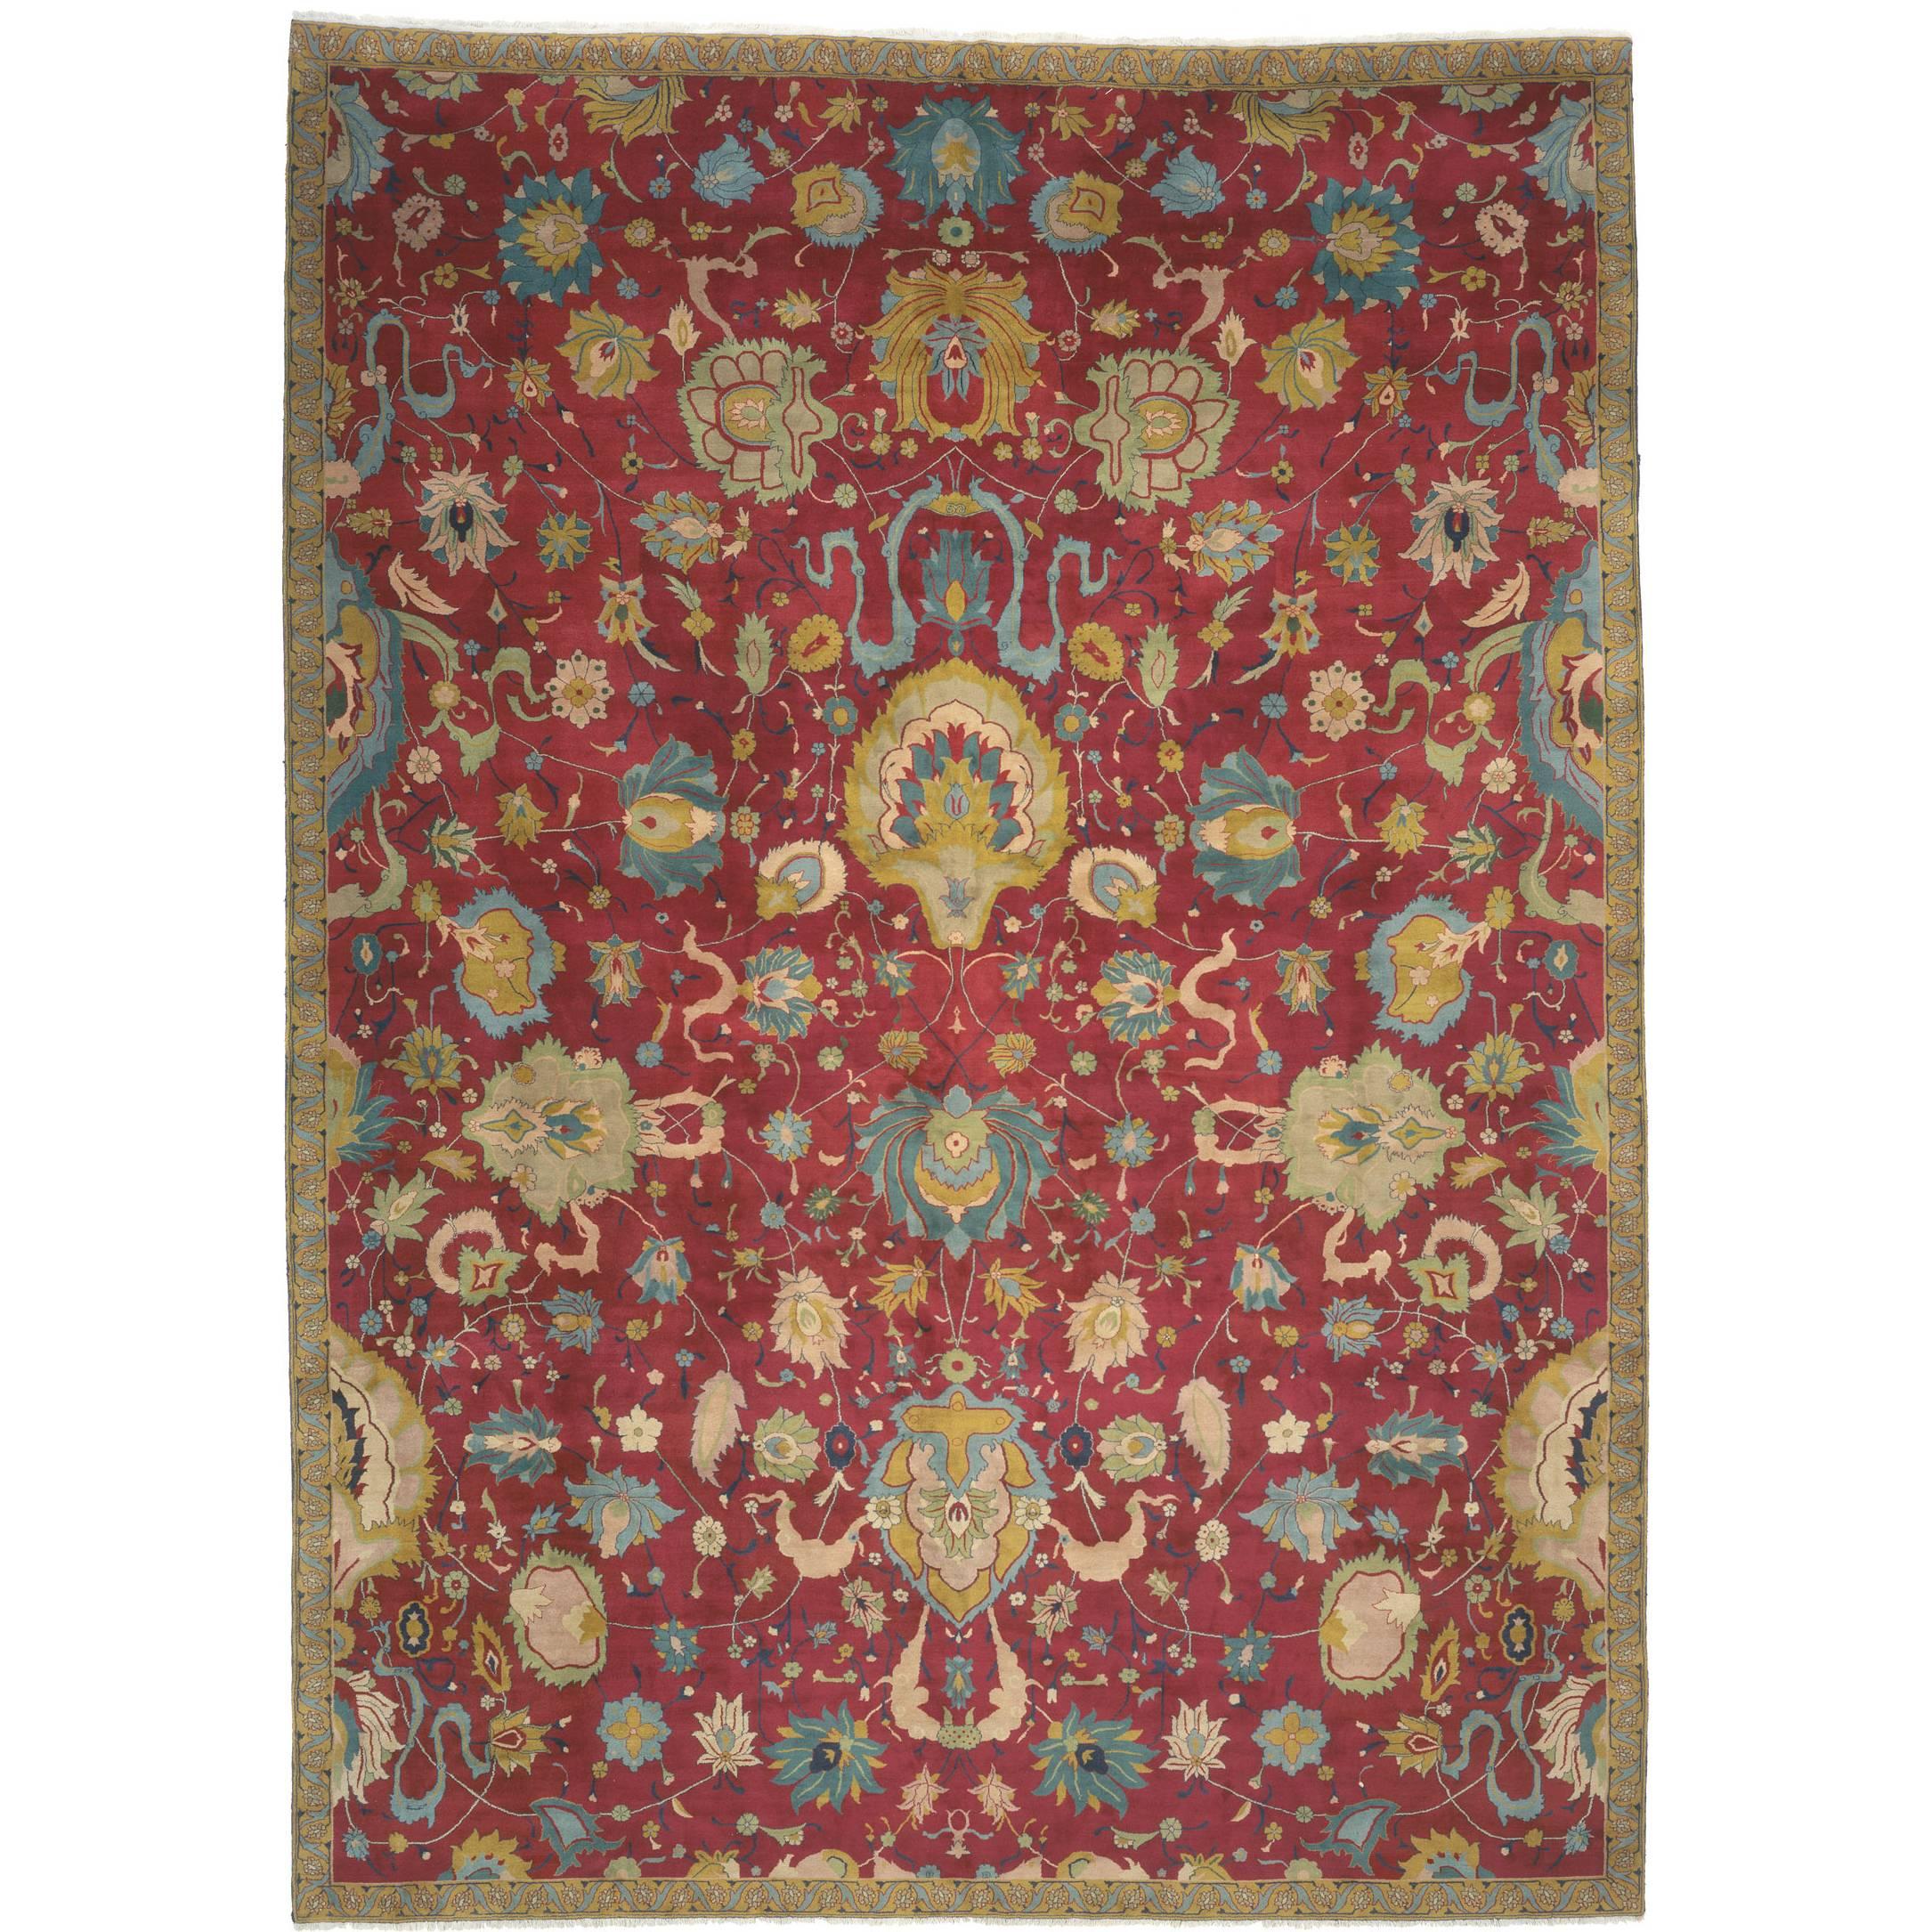 Late 19th Century Agra Carpet